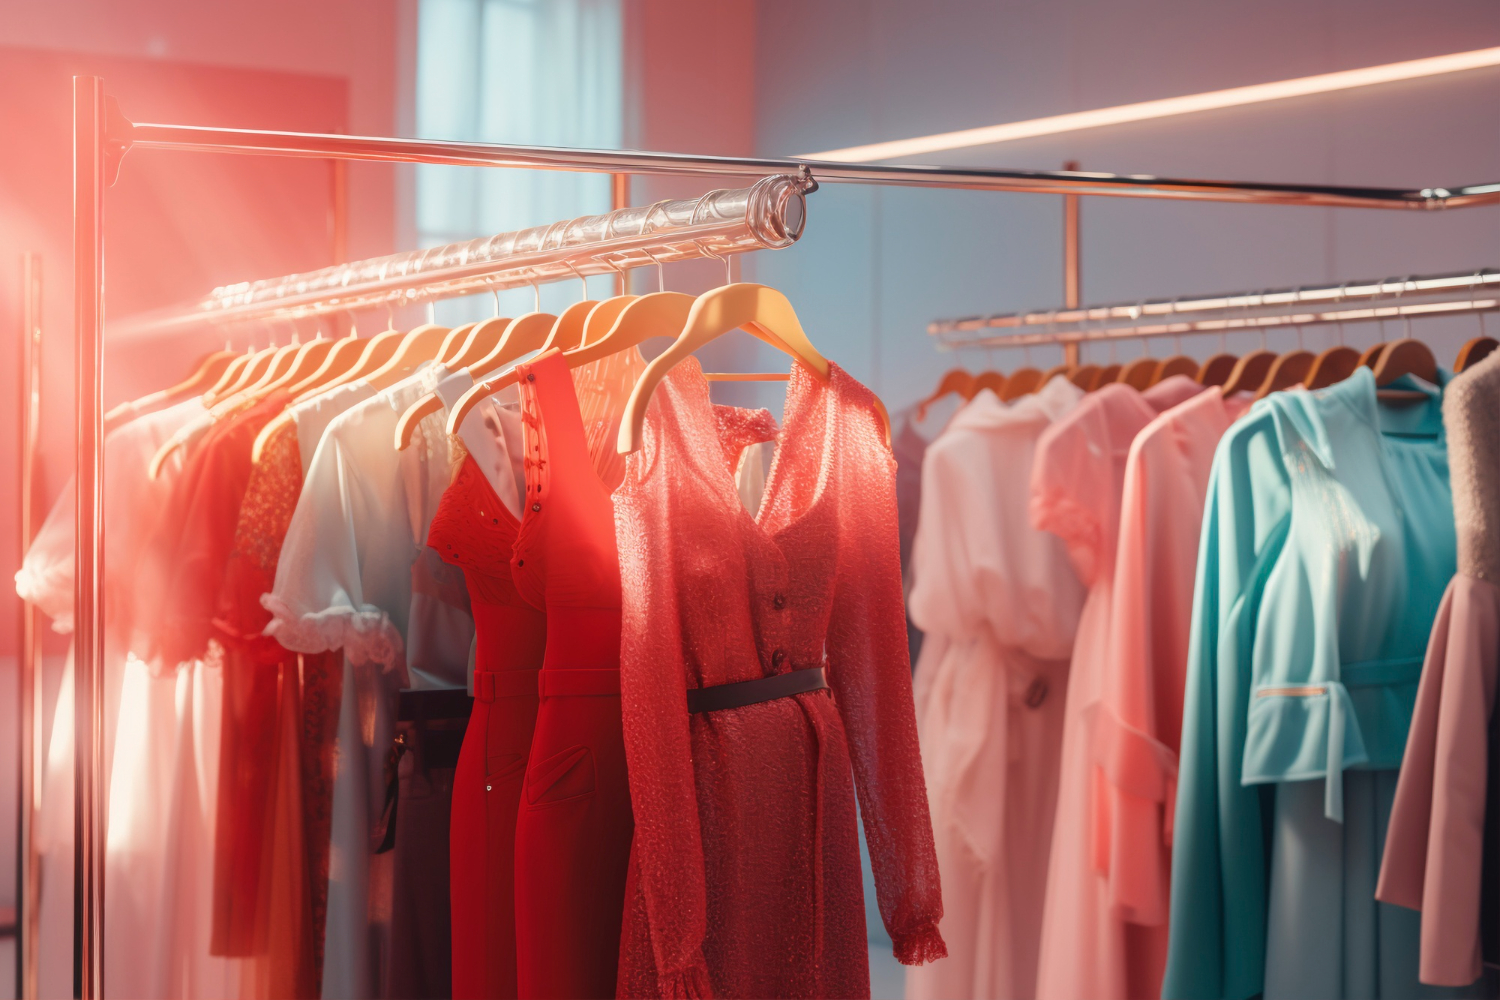 Clothes on a clothing rack | Source: Freepik